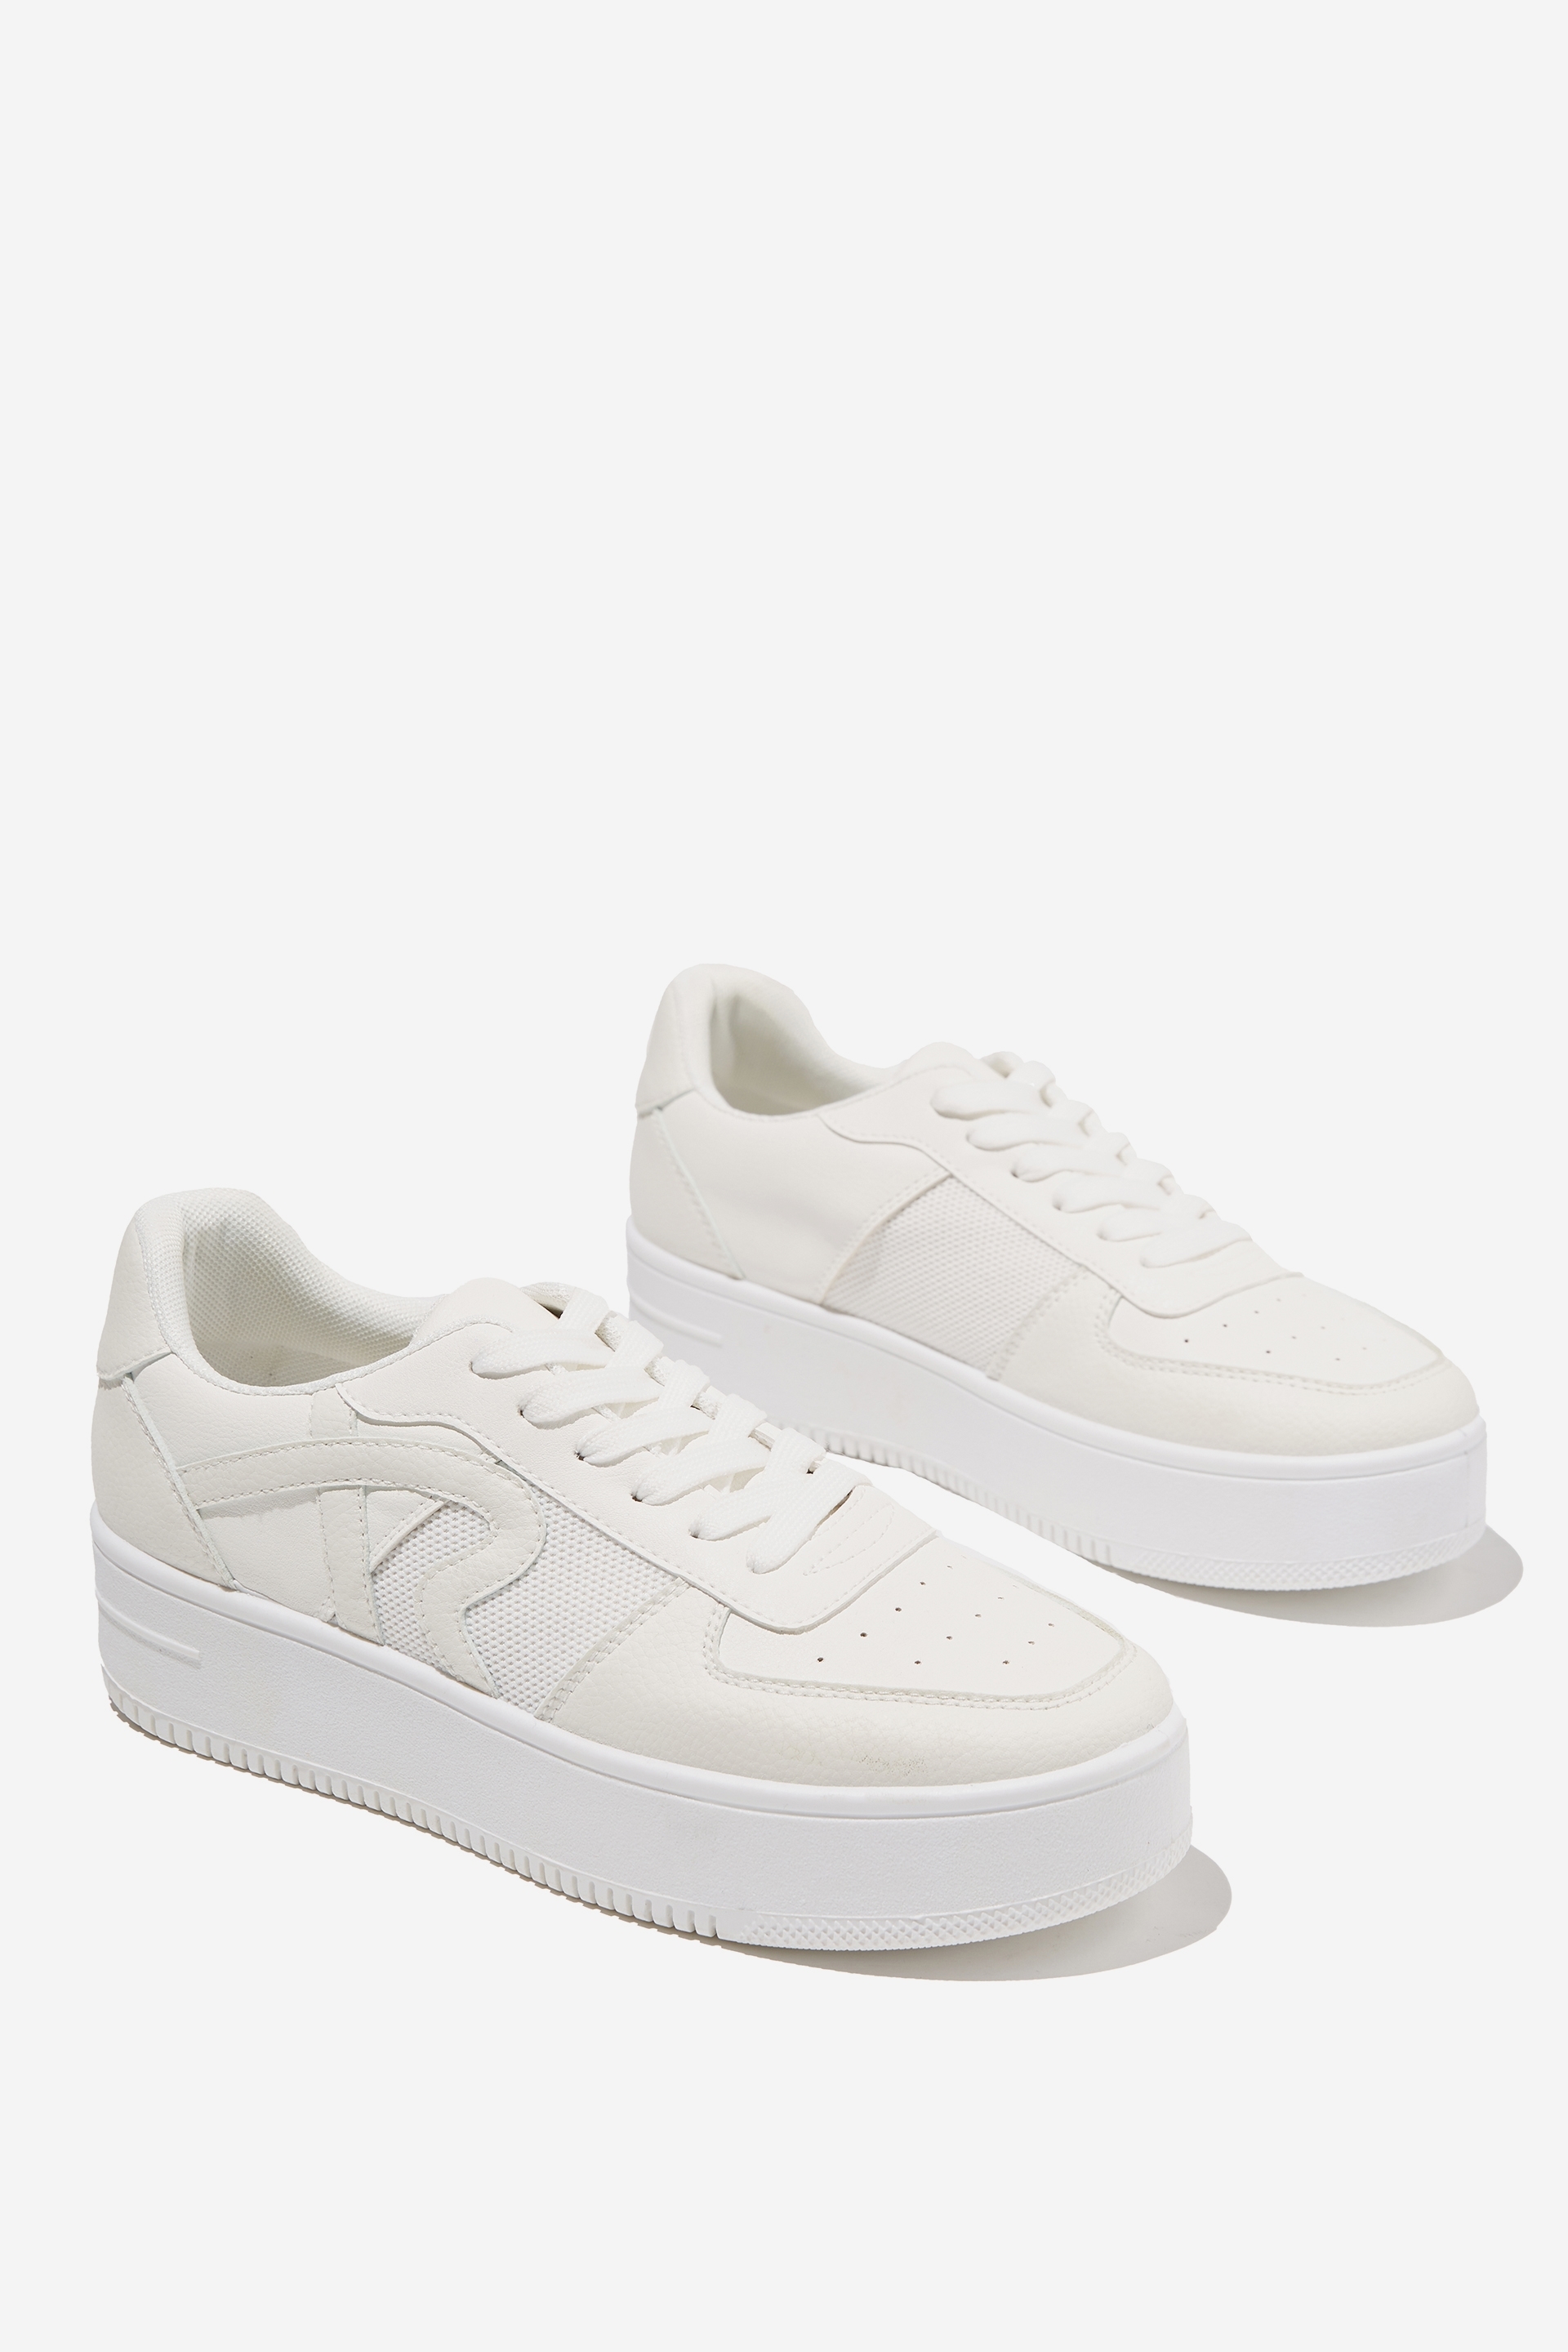 Rubi - Lexi Platform Sneaker - White multi